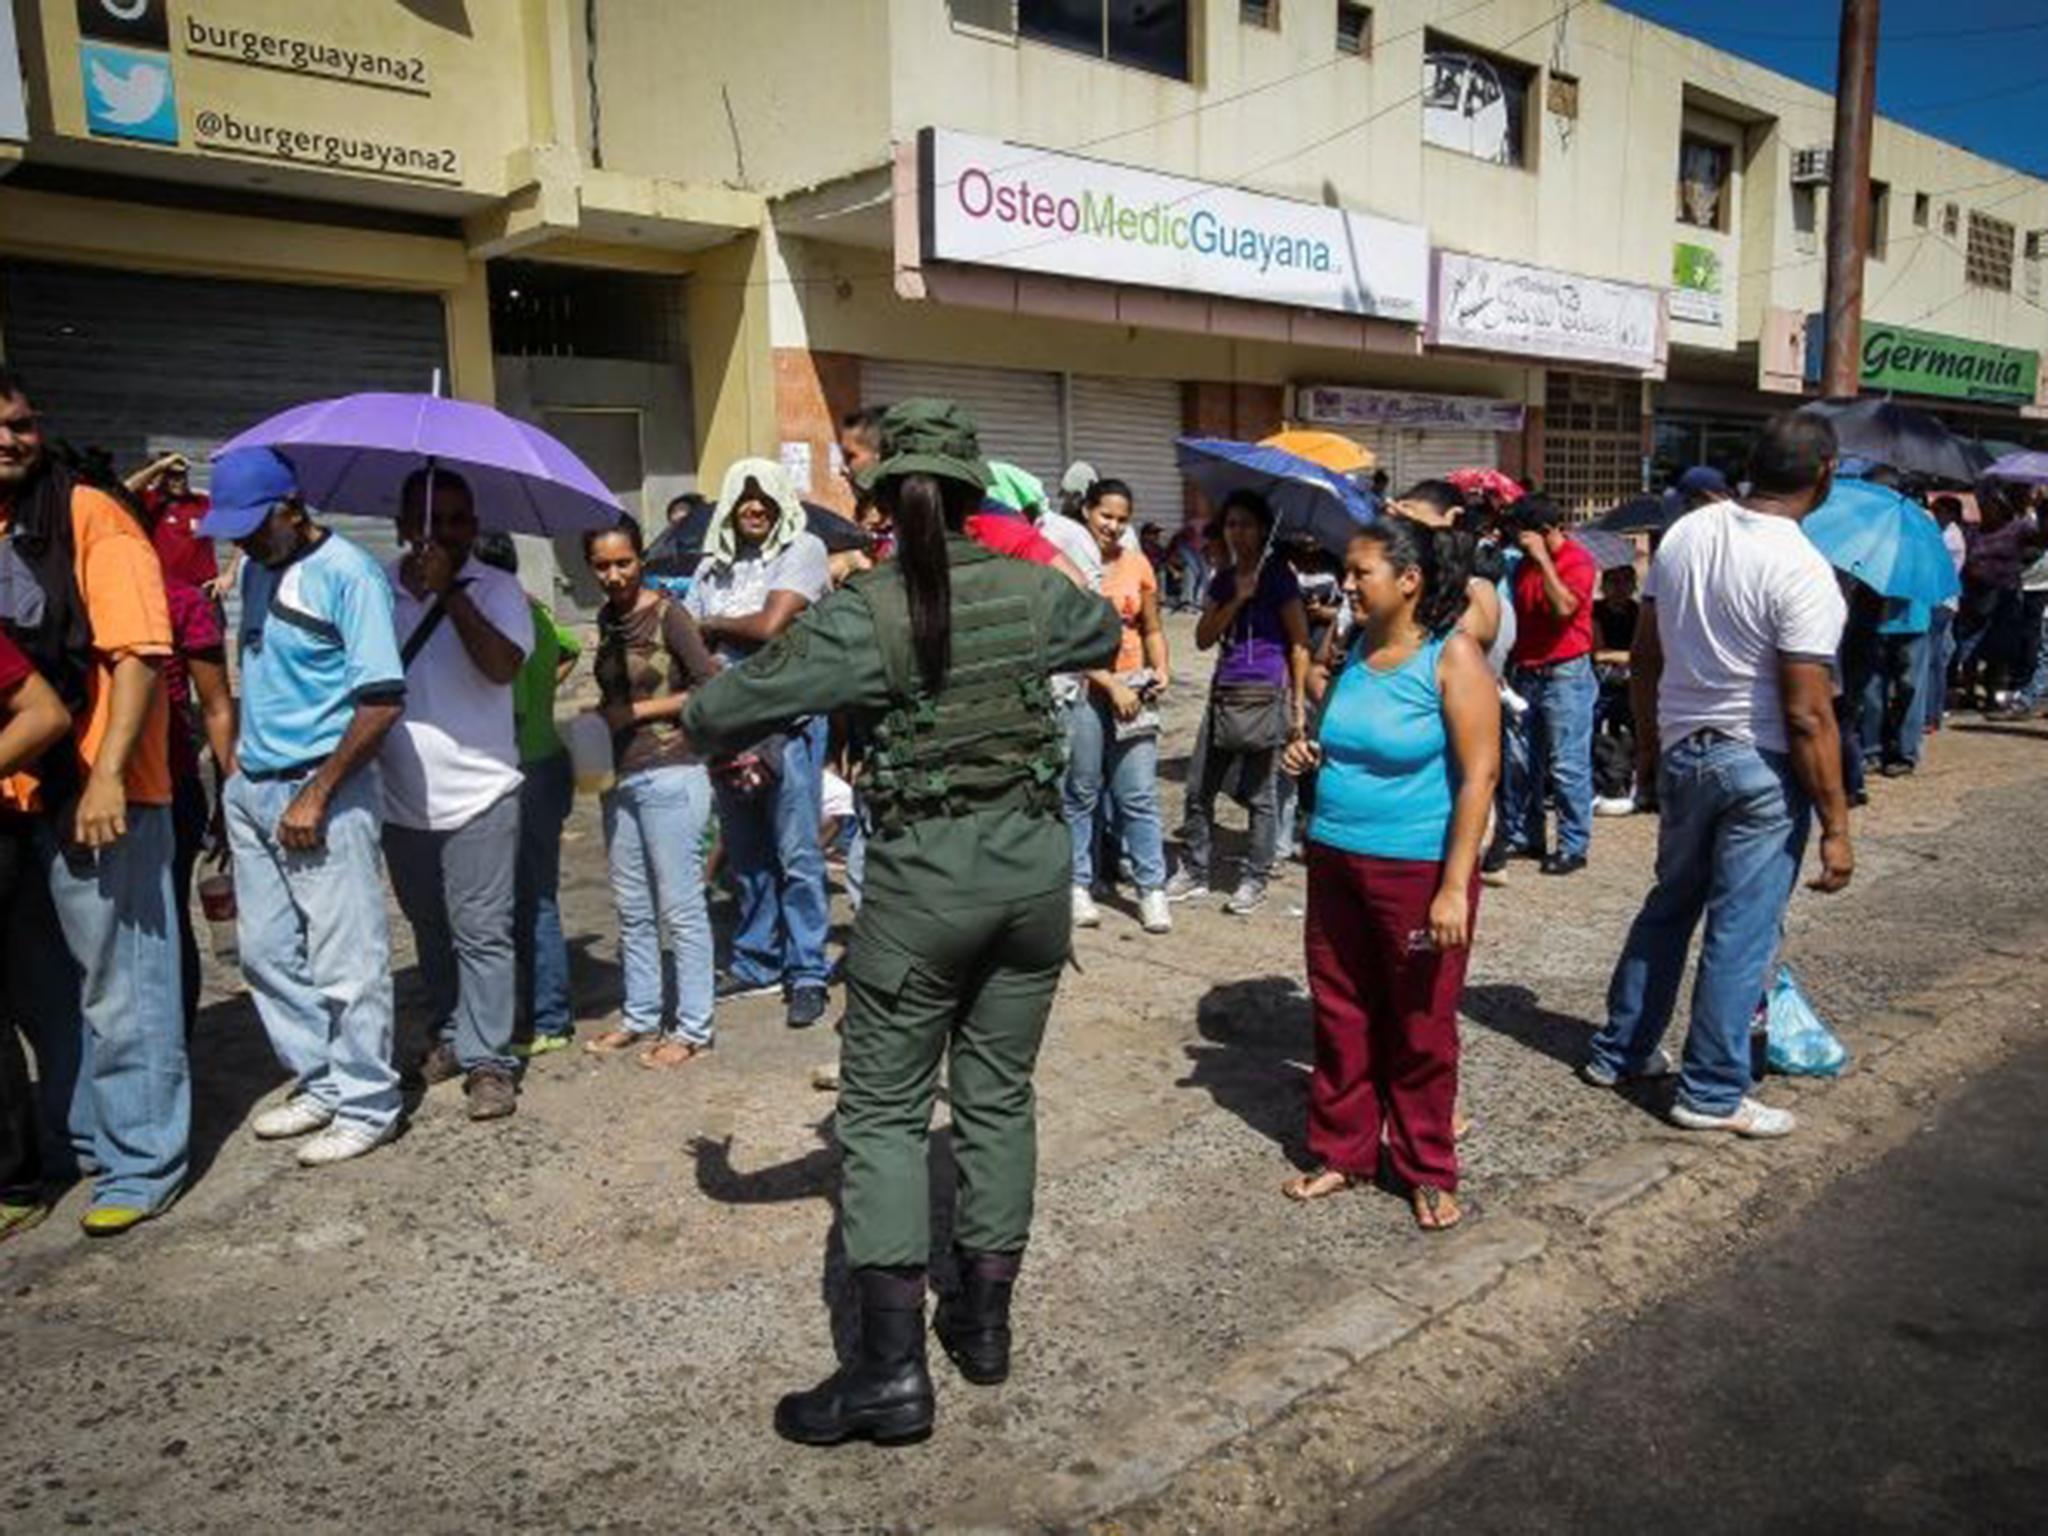 Venezuela's food shortage has seen people queueing to buy basic items